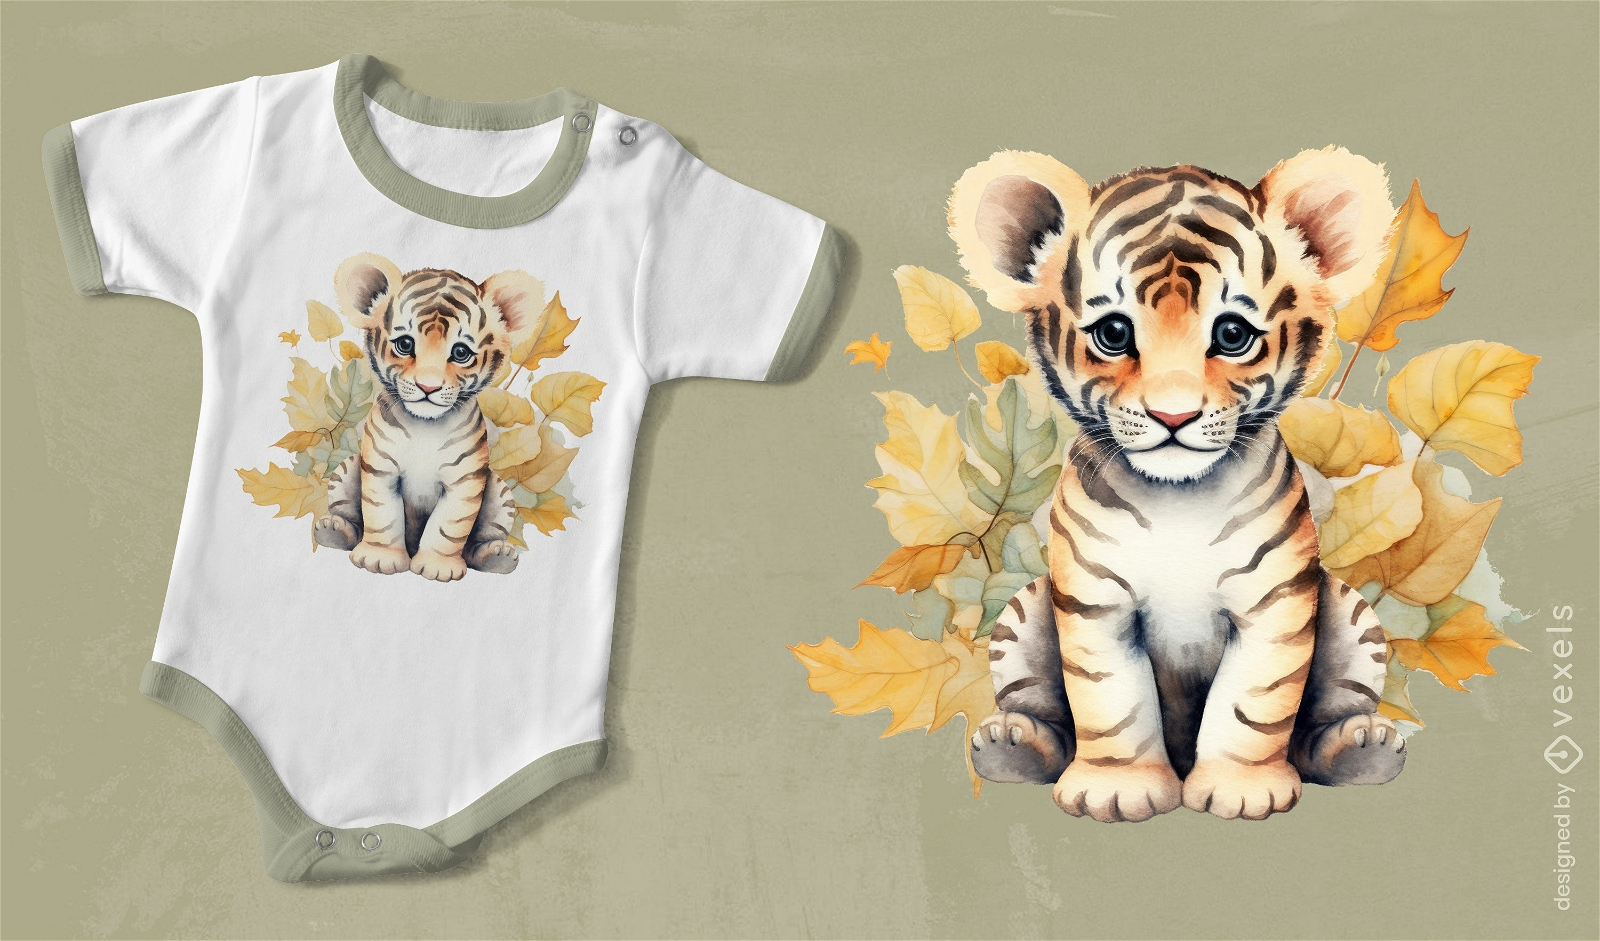 T-shirt animal filhote de tigre bebê psd